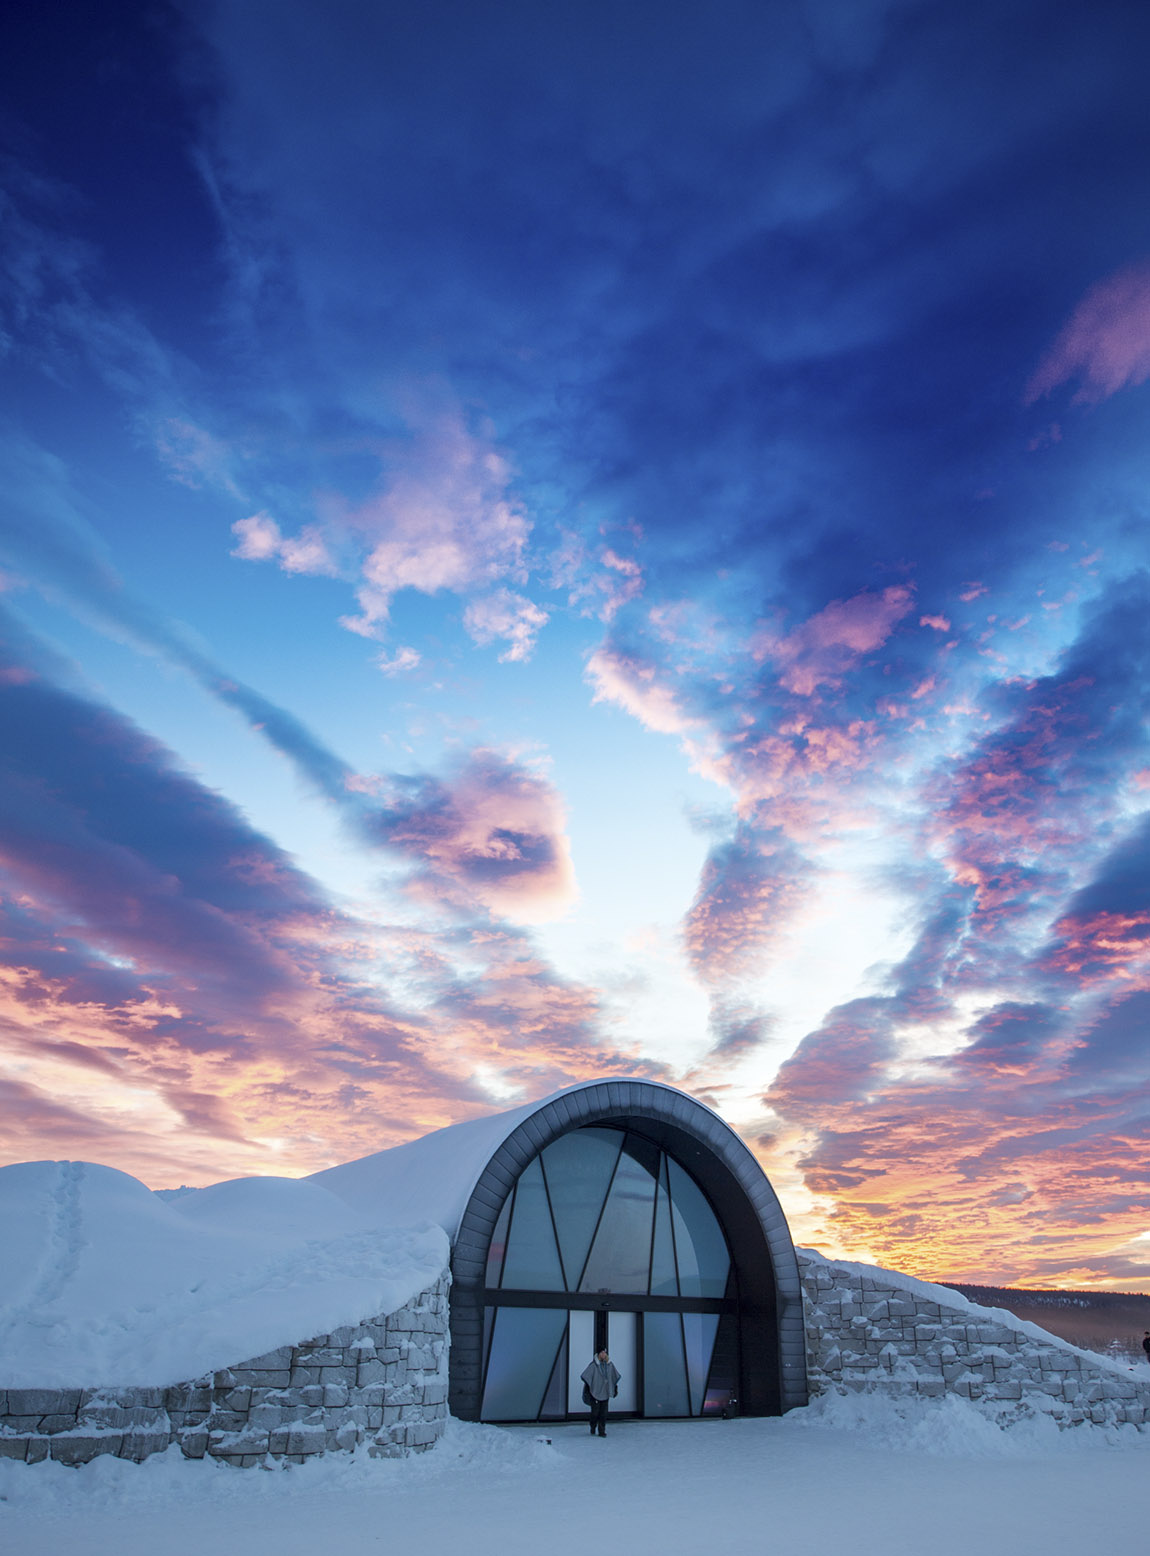 Arctic art: Sweden’s world-famous Icehotel